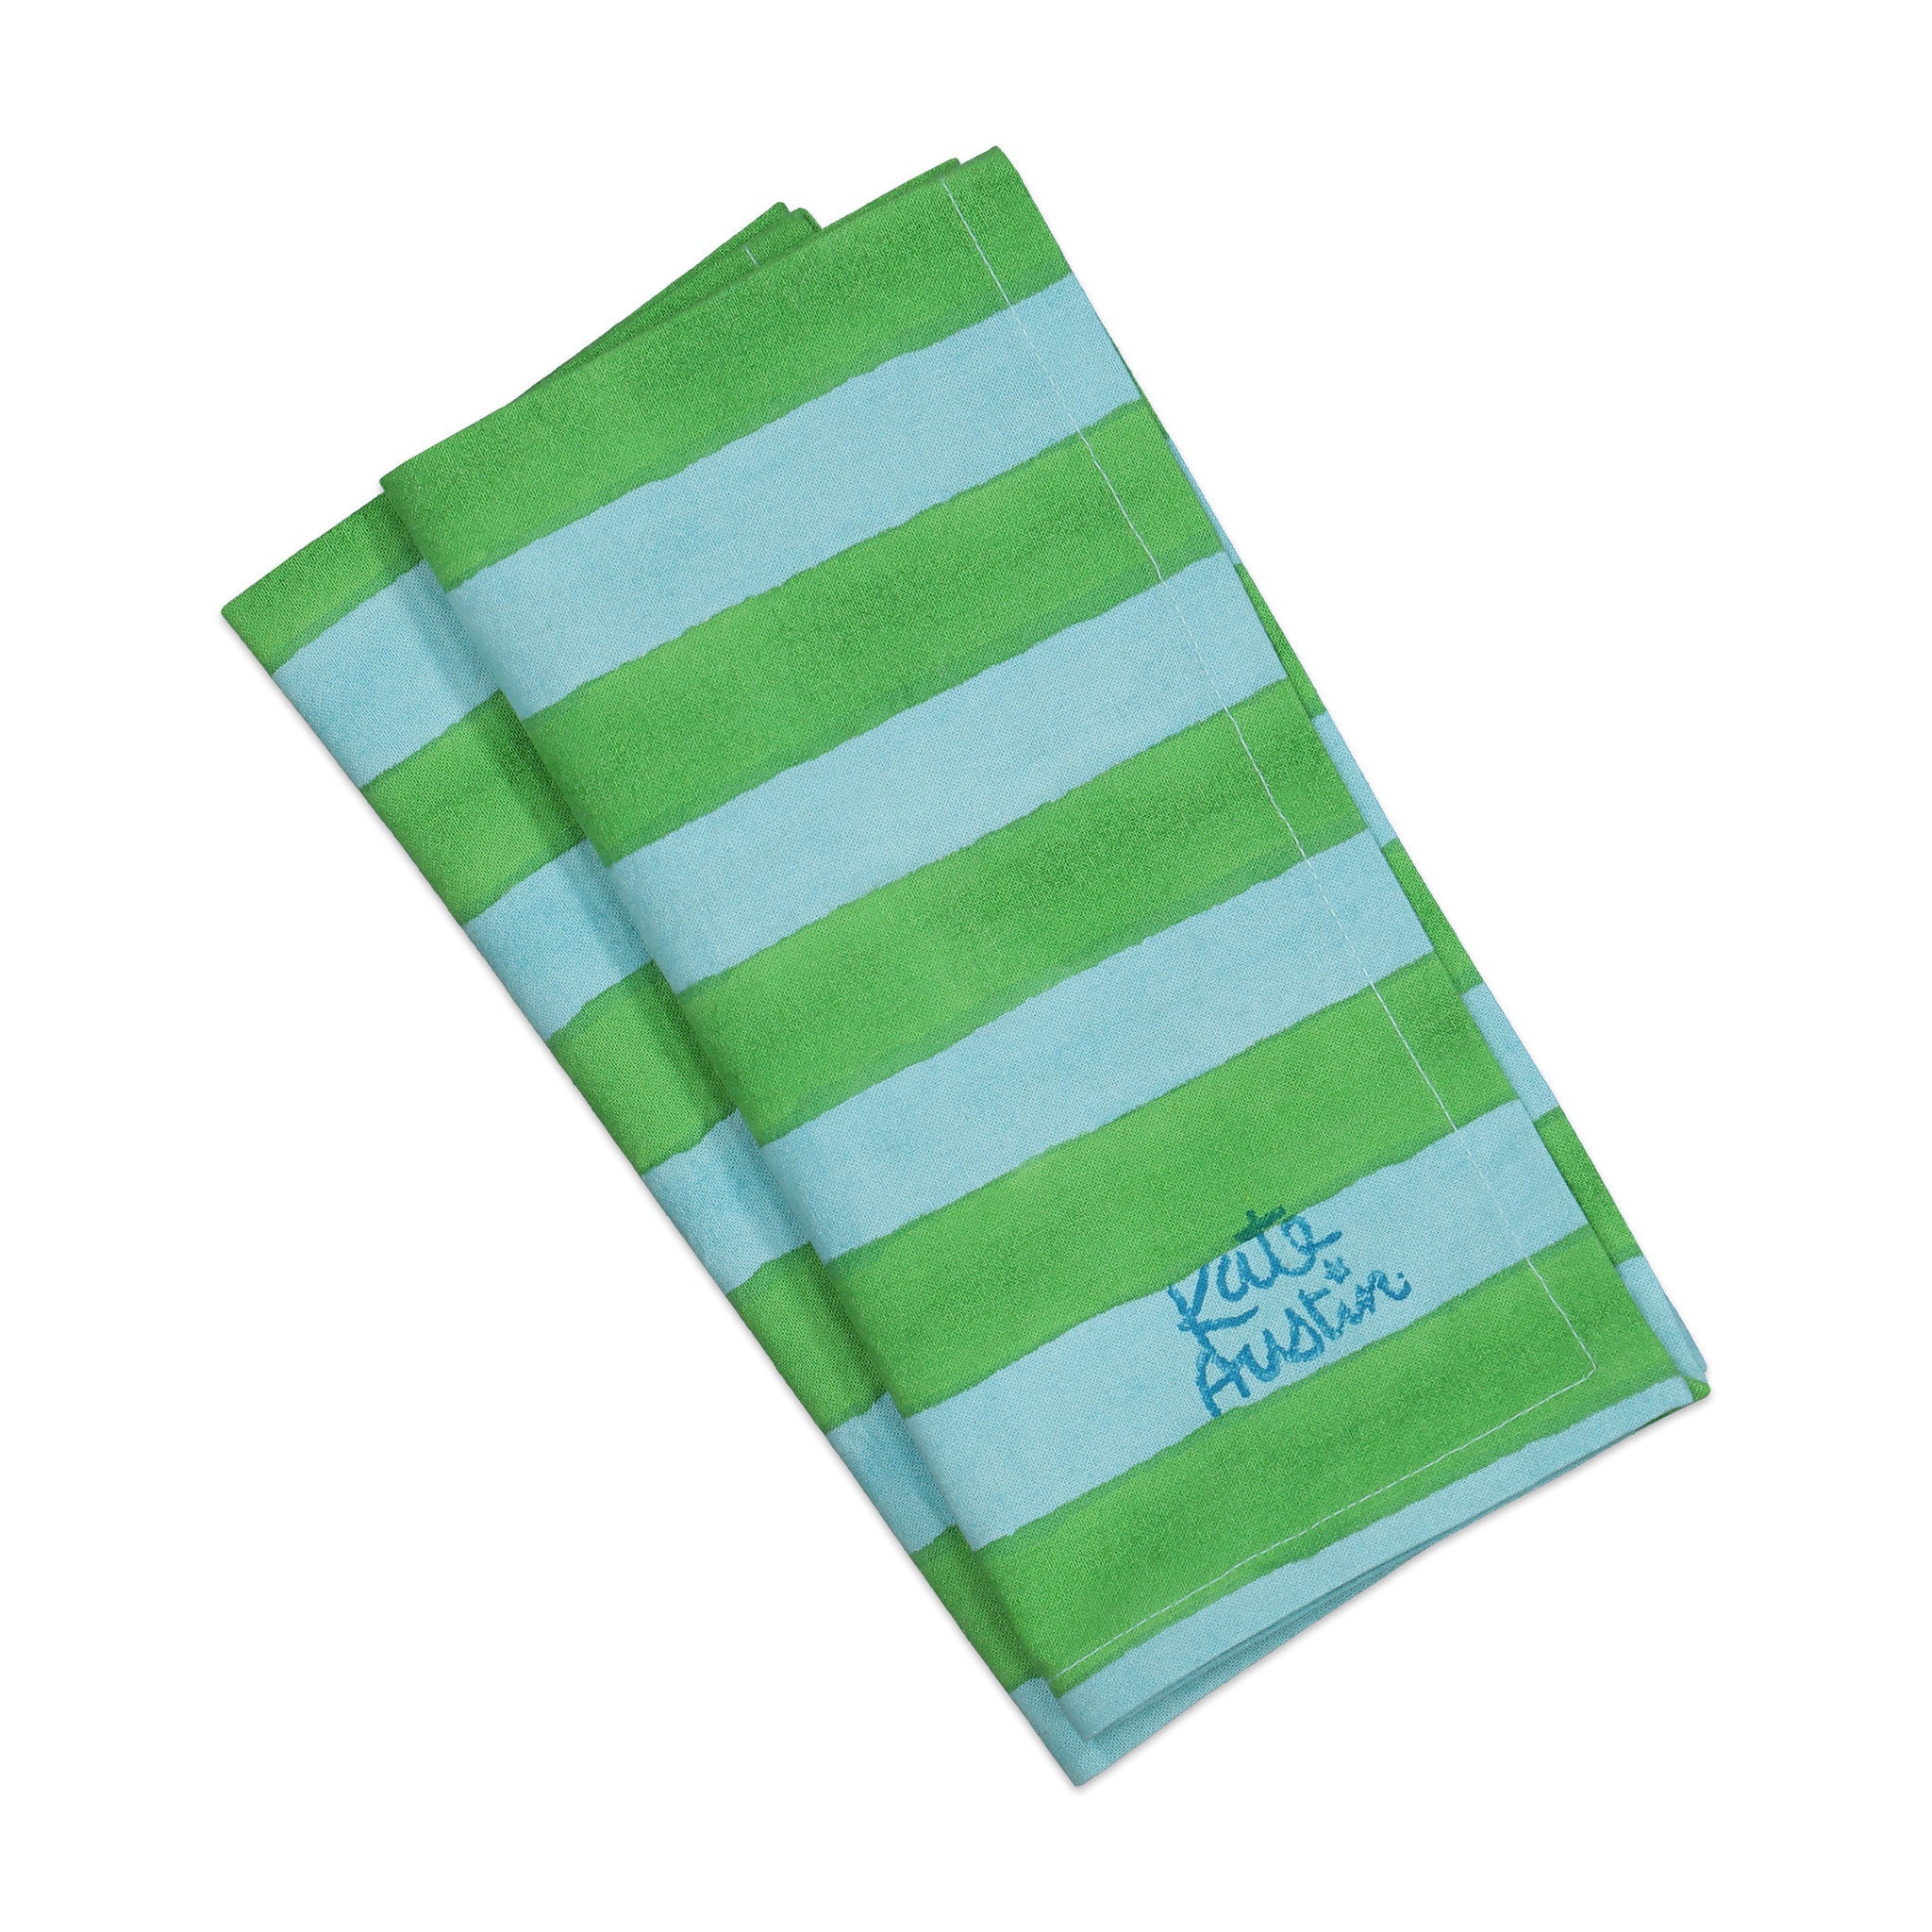 Cloth Napkin in Blue Green Cabana Stripe - Set of 8